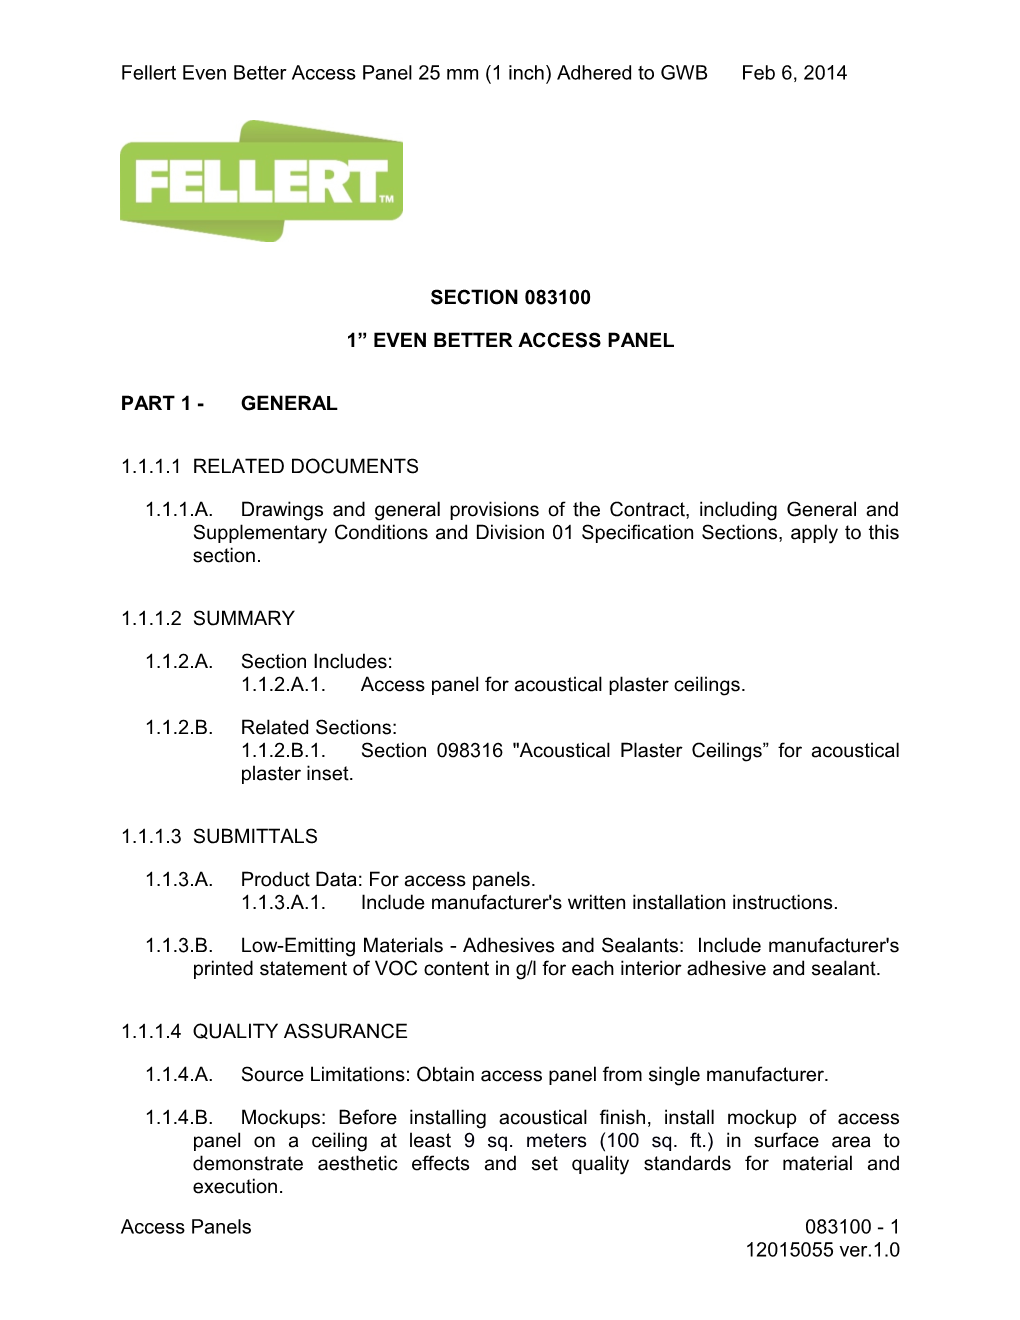 Fellert Even Better Access Panel 25 Mm (1 Inch) Adhered to GWB Feb 6, 2014